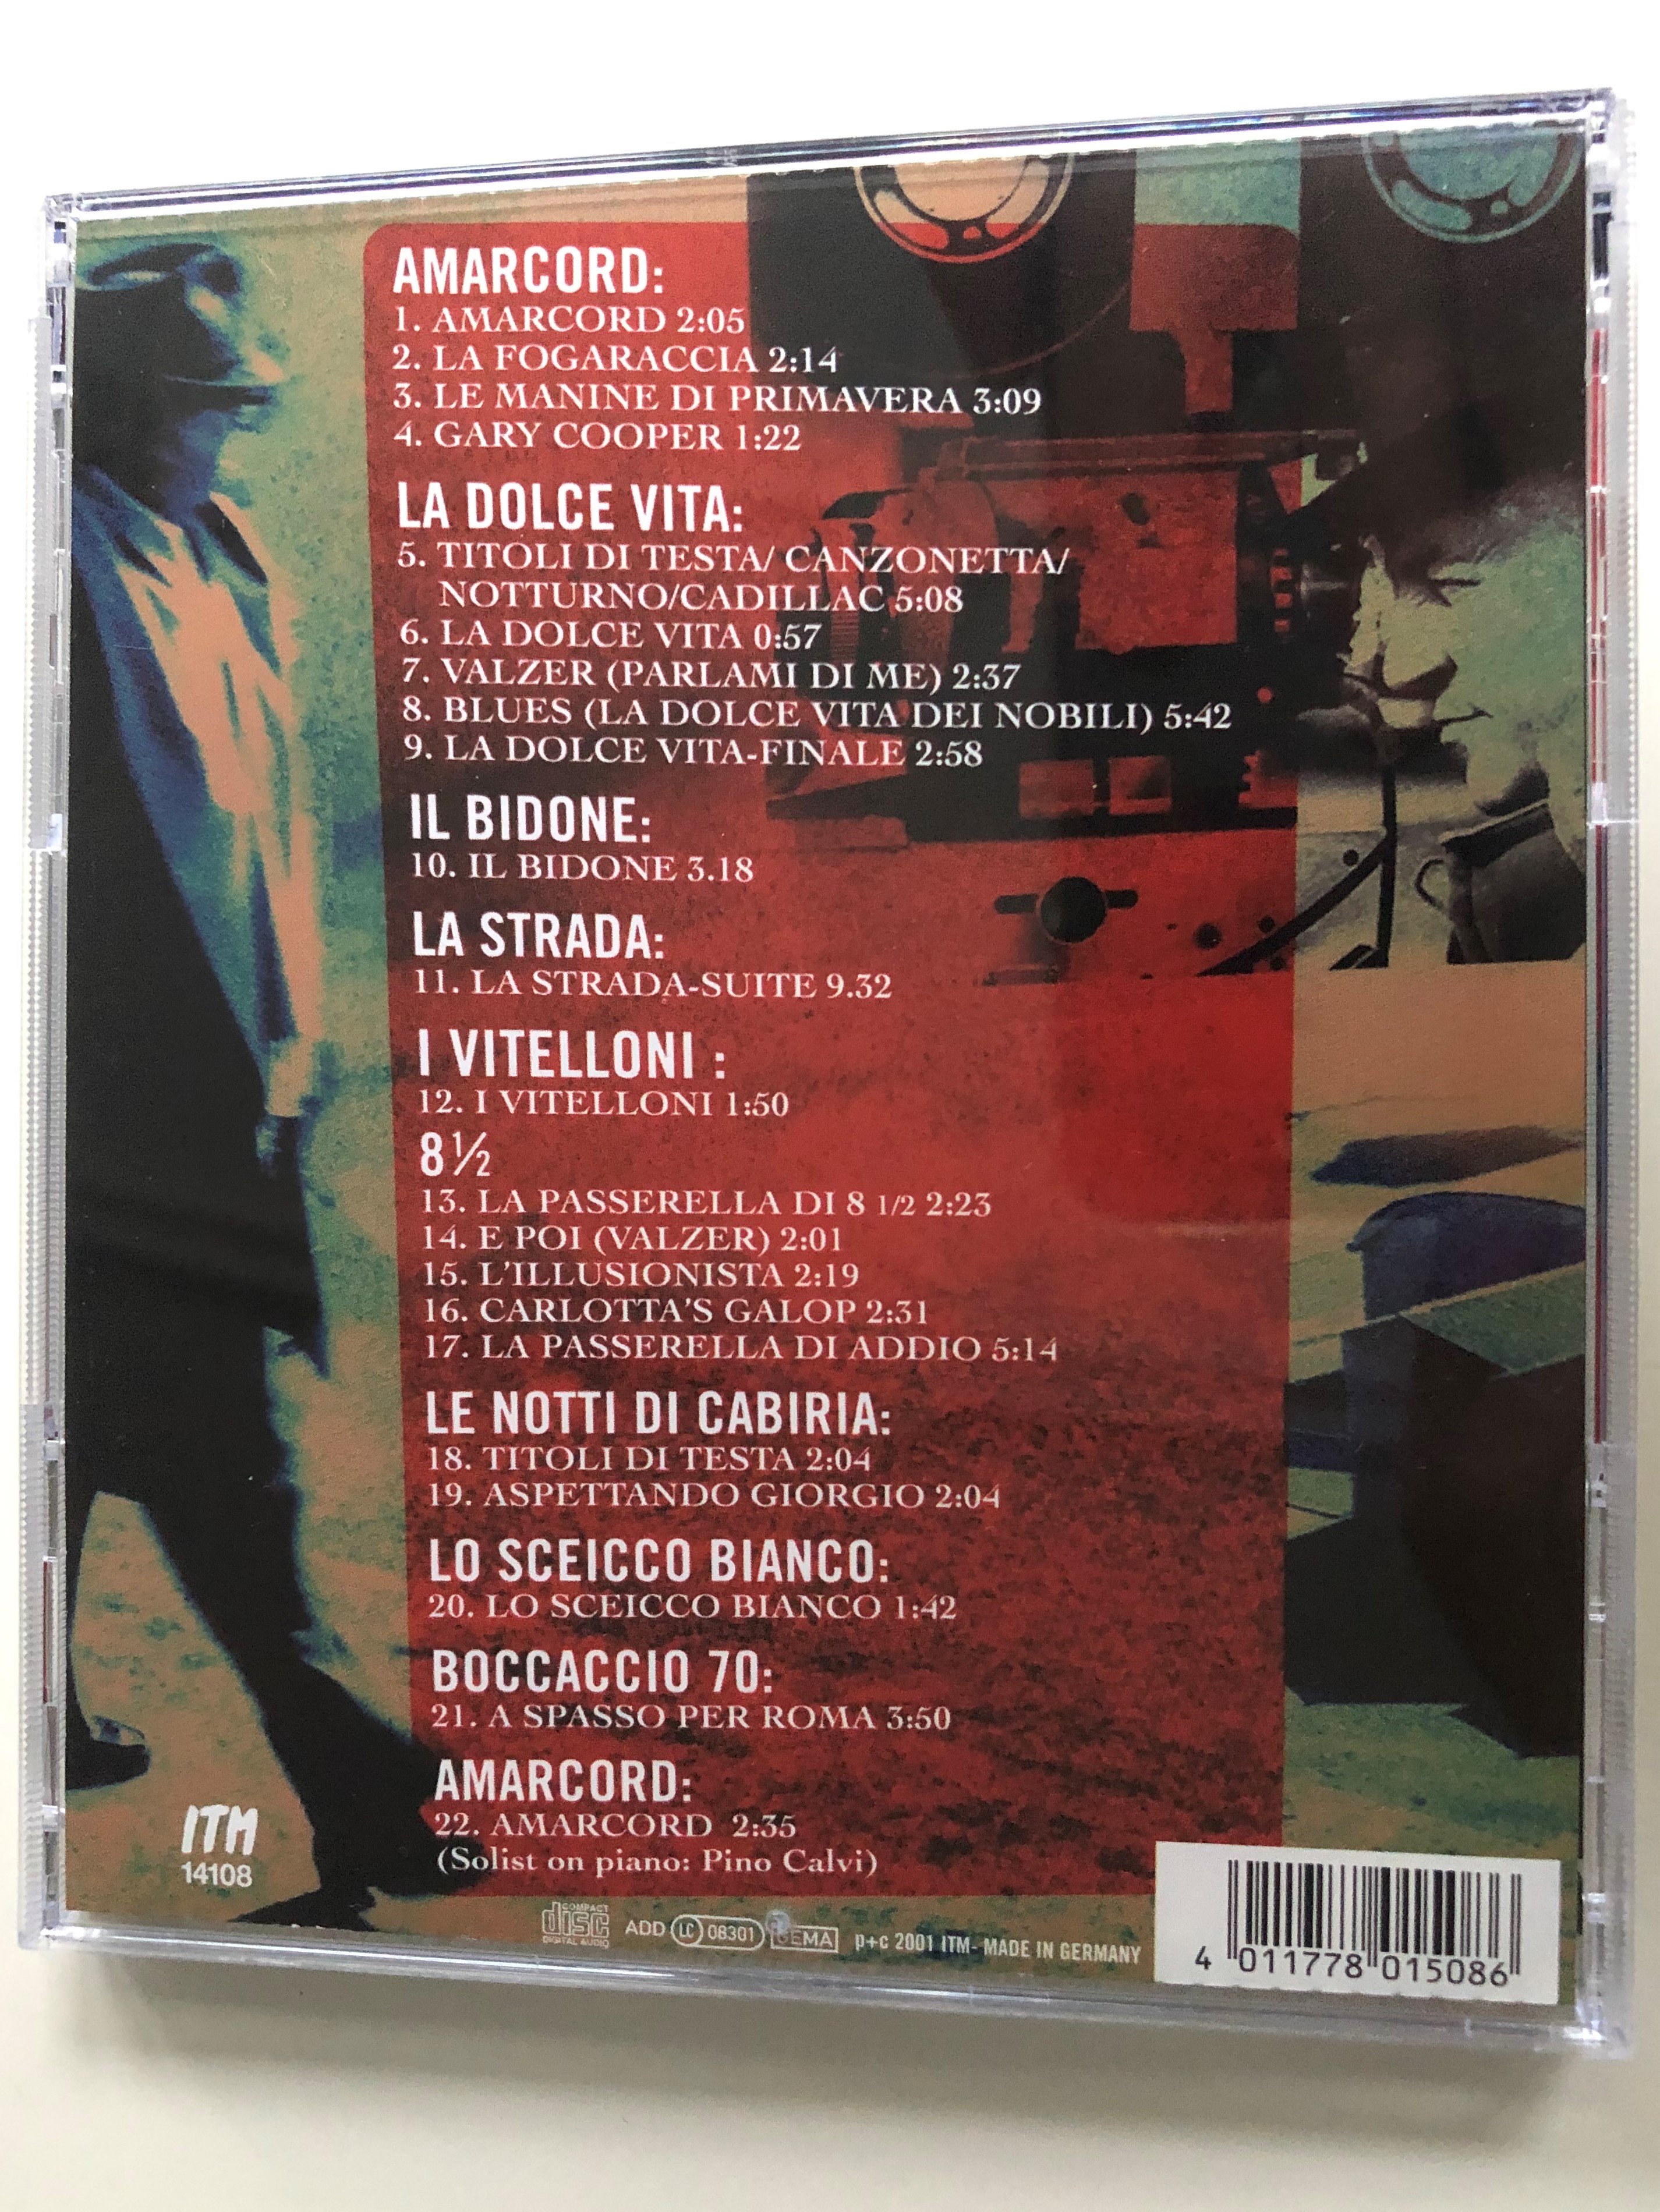 original-music-for-the-movies-of-federico-fellini-amarcord-la-dolce-vita-la-strada-8-12-and-many-more...-composed-by-nino-rota-itm-records-audio-cd-itm-14108-5-.jpg